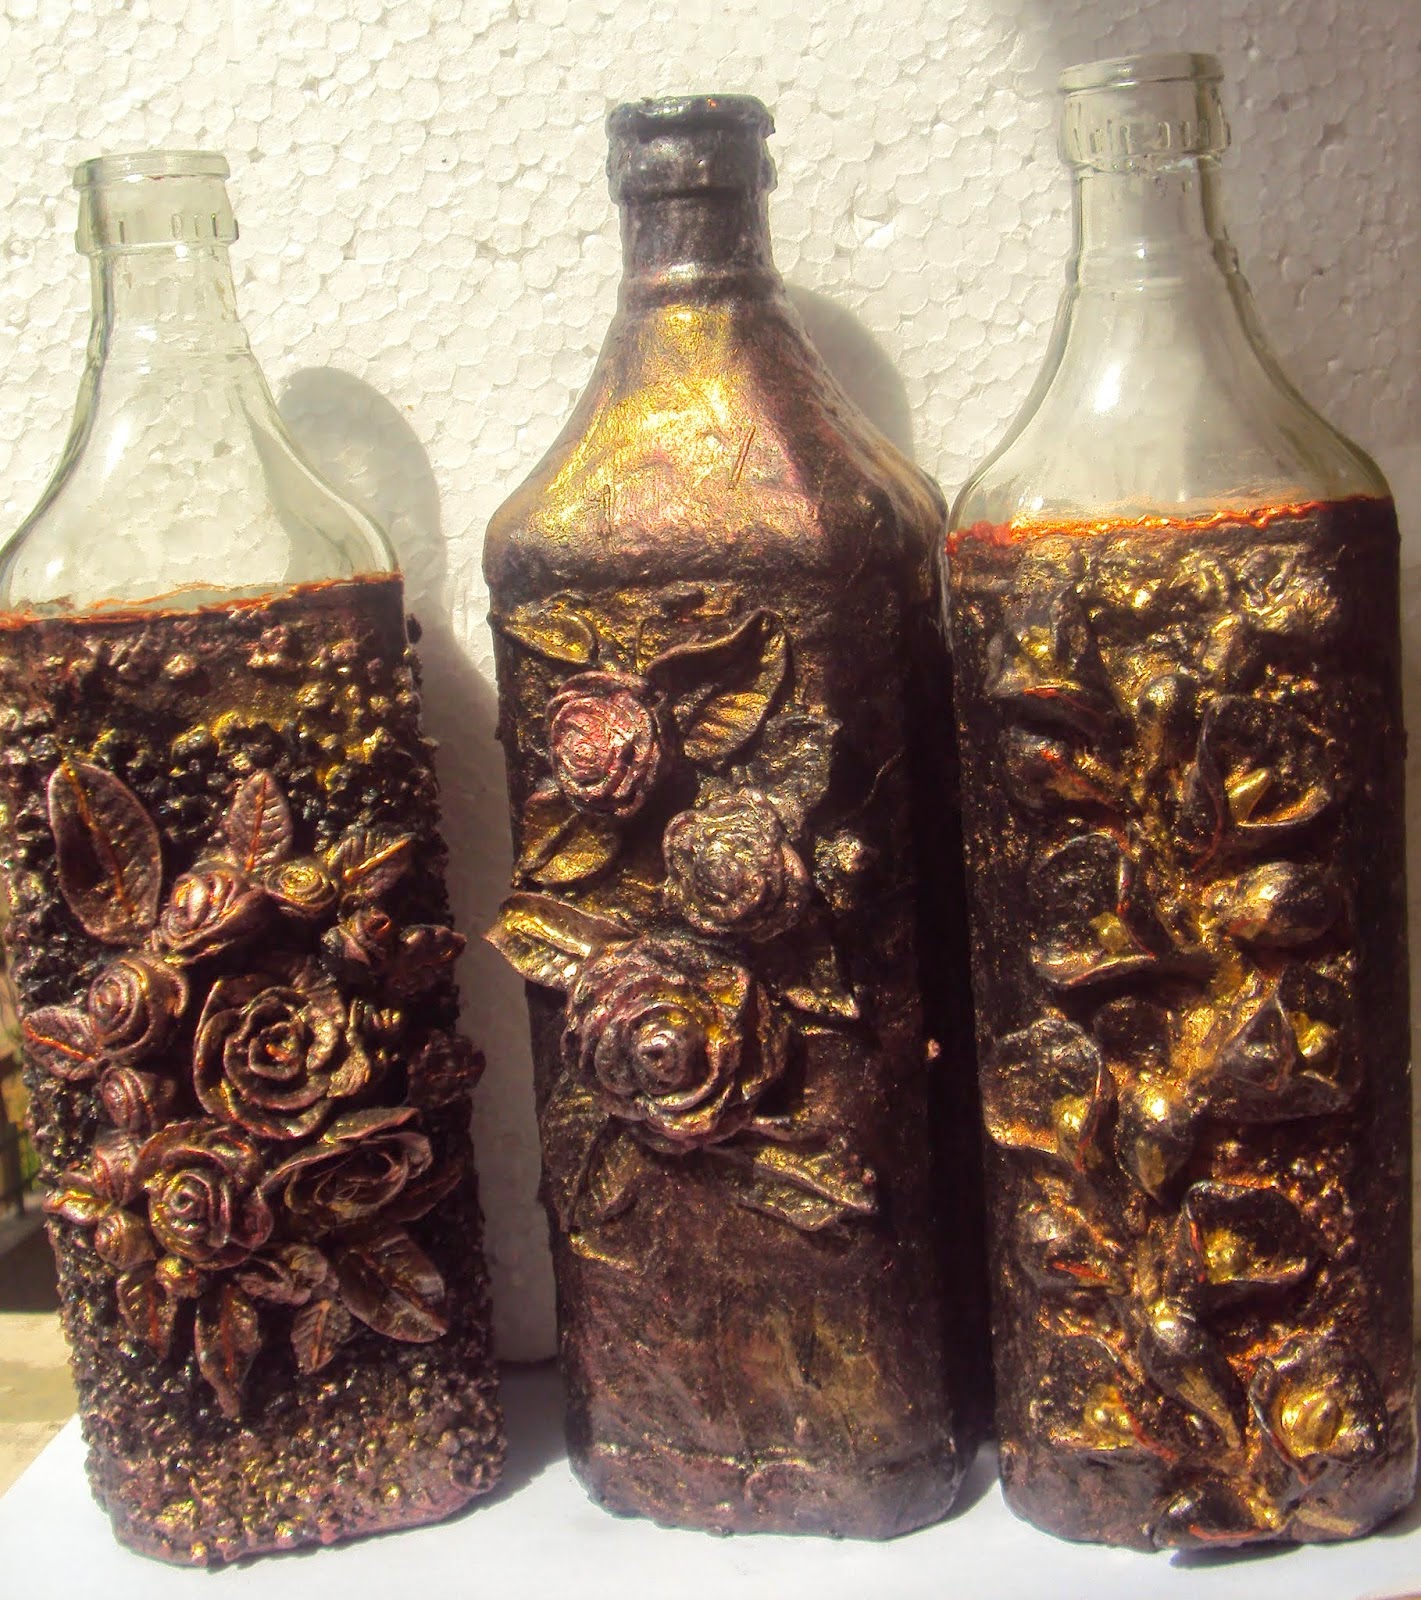 http://kalasirjana.blogspot.in/2014/07/a-set-of-threealtered-bottles-and.html